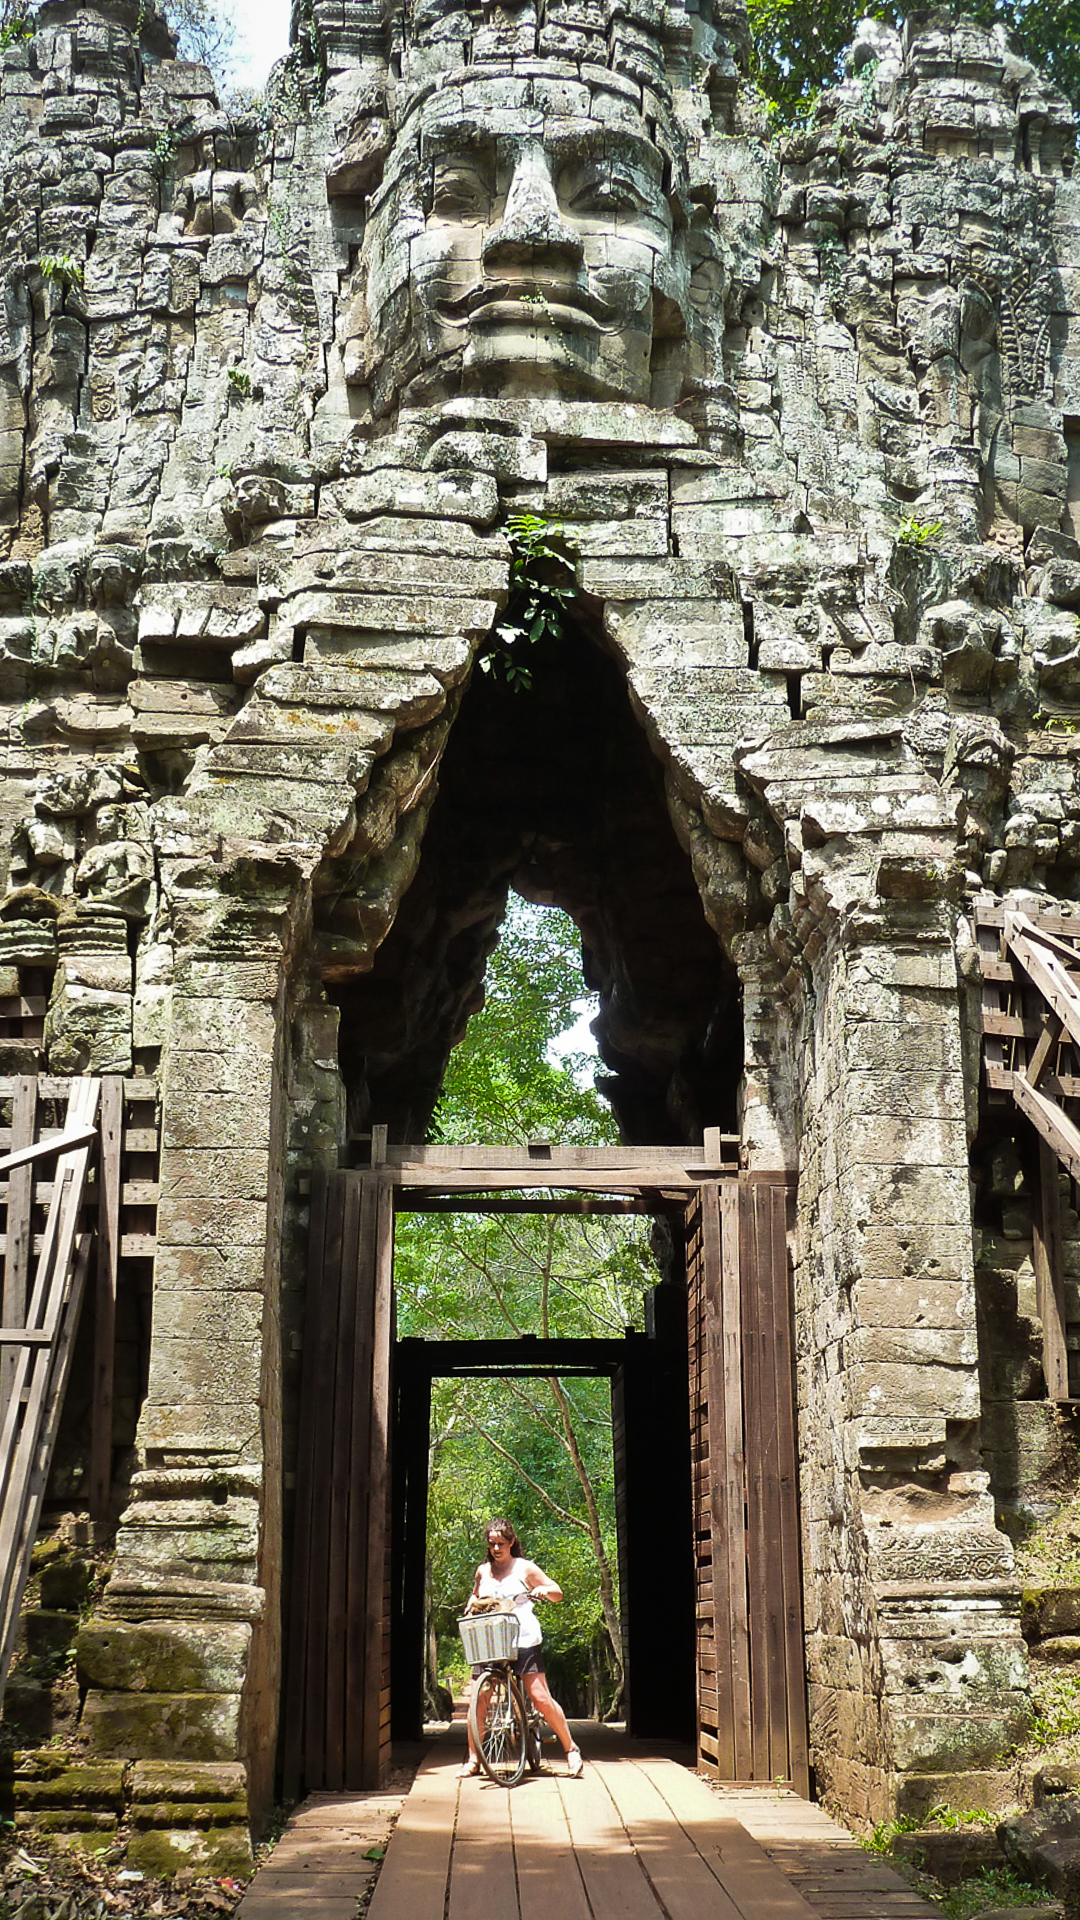 Cycling through the West Gate, Angkor Thom